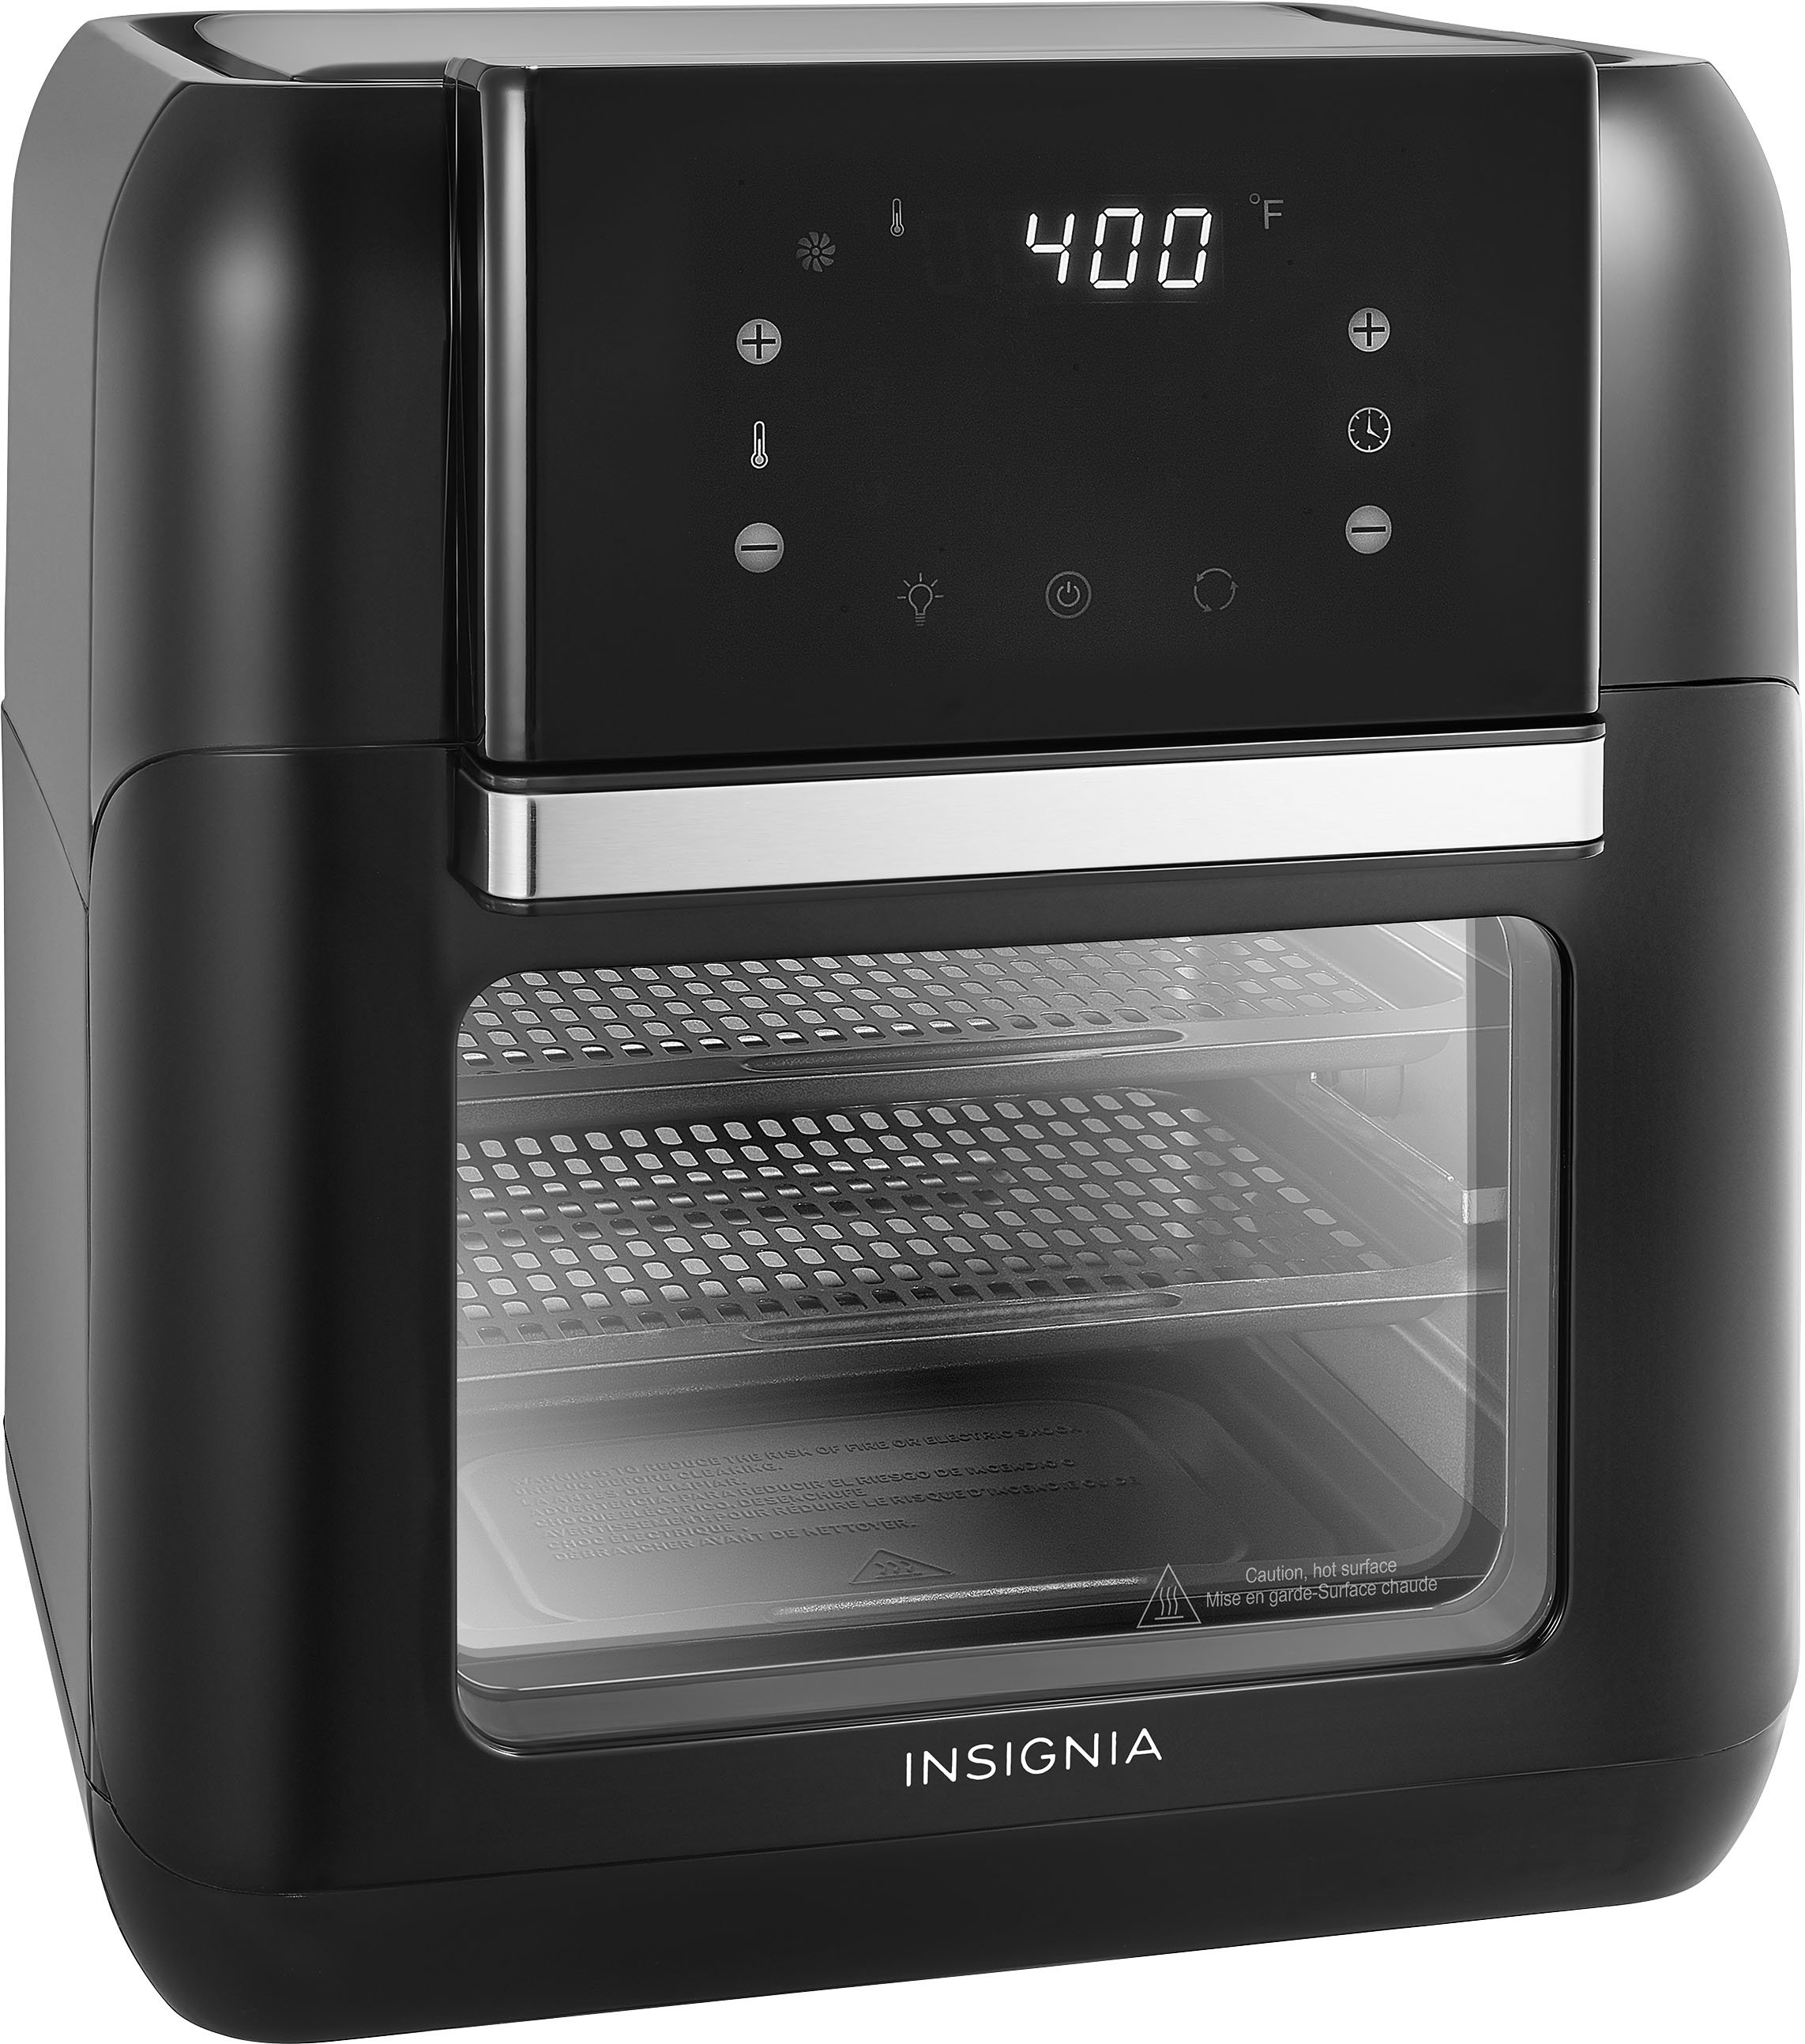 12-Cup Muffin Pan for Ninja Foodi Digital Air Fry Oven Black 105SG100 -  Best Buy